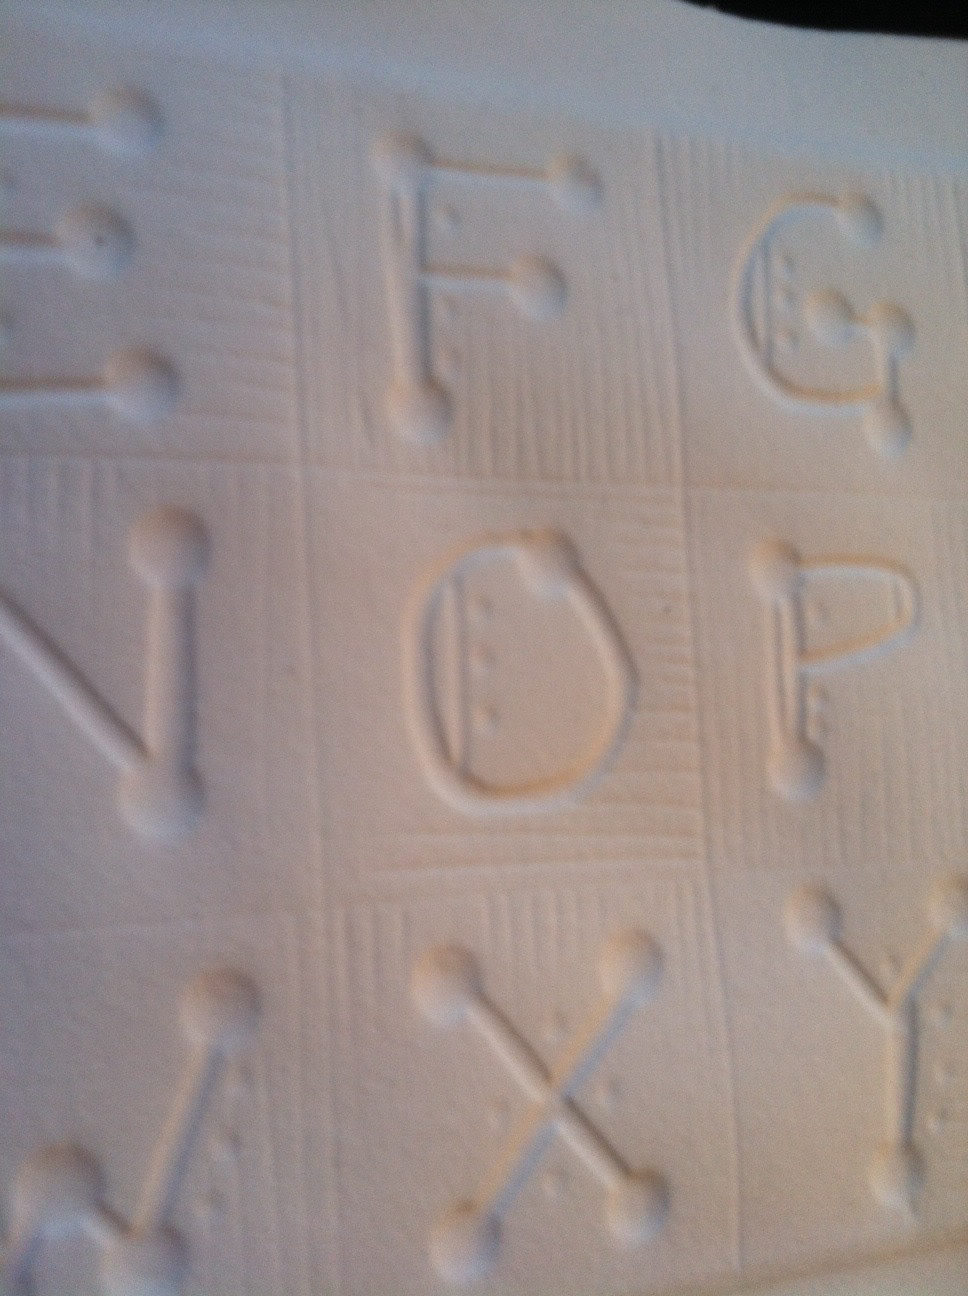 printmaking  typography pangrams alphabet letters